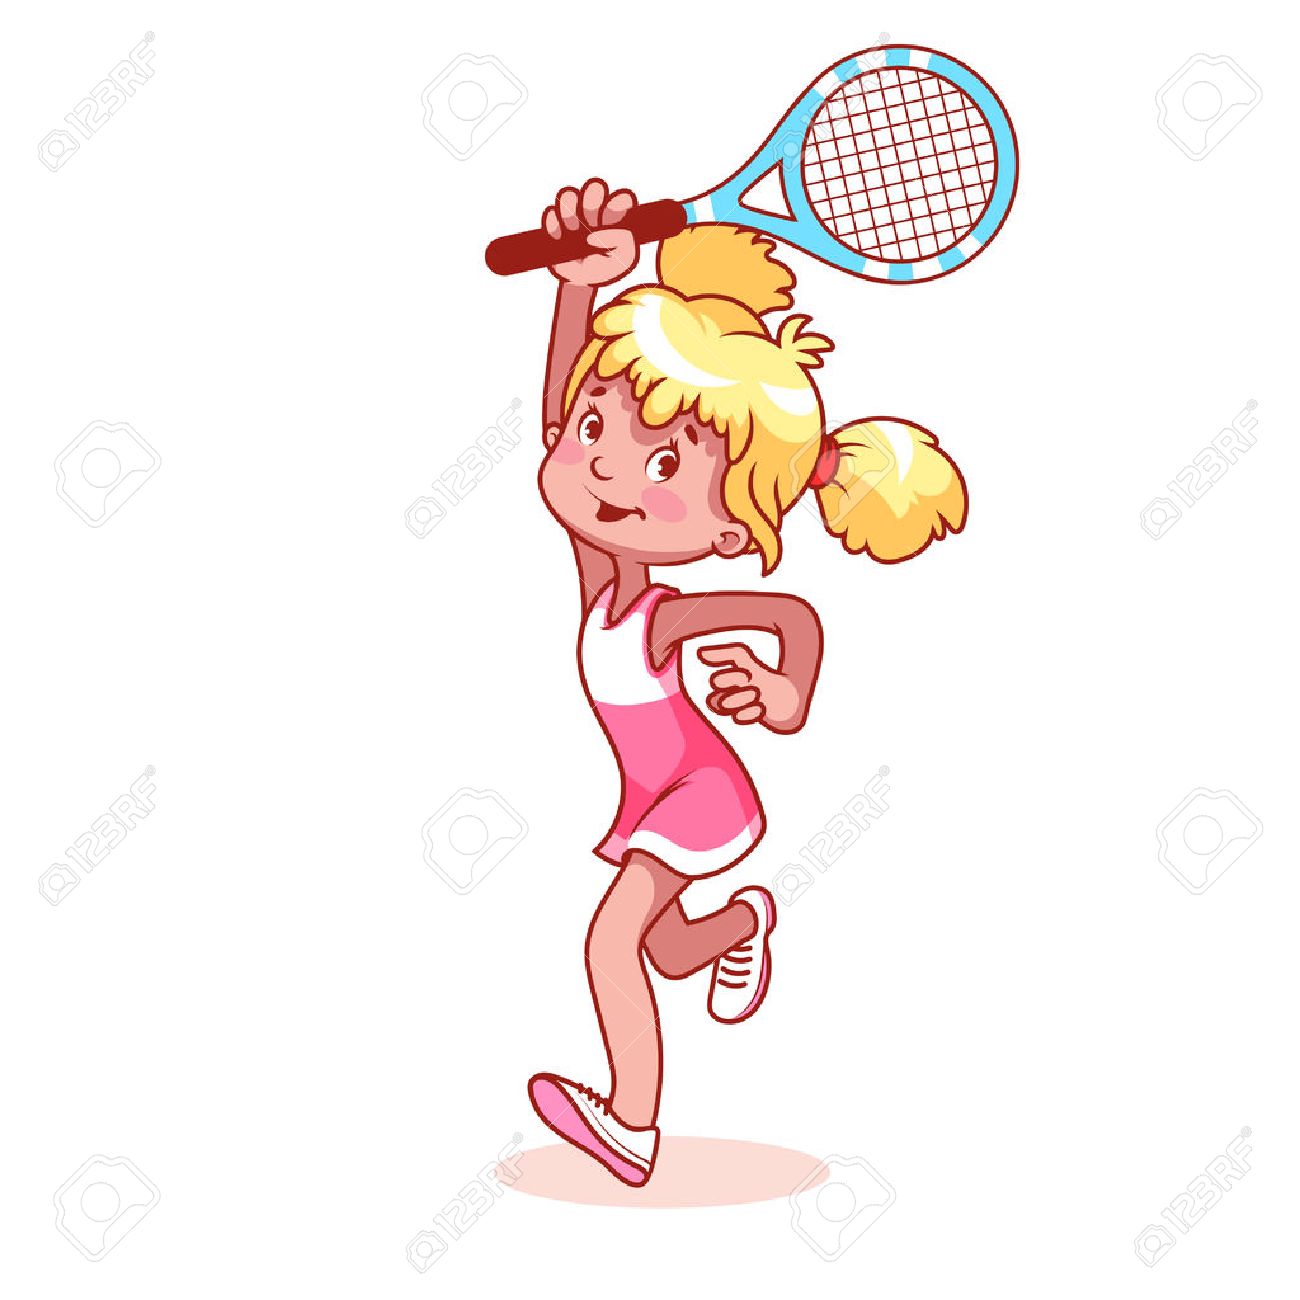 Tennis player clipart.